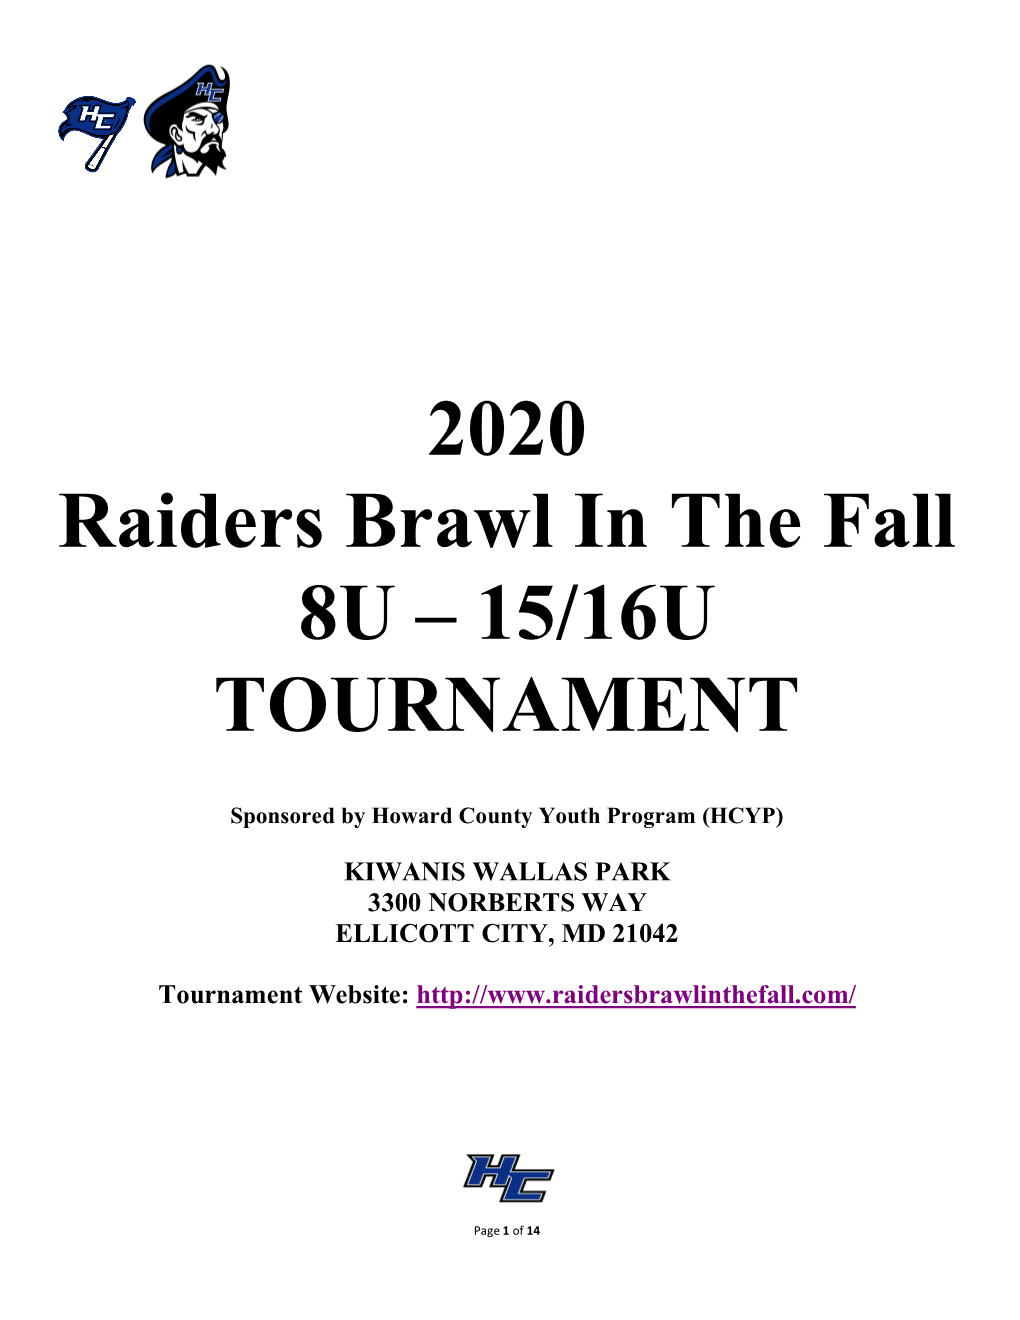 2020 Raiders Brawl in the Fall 8U – 15/16U TOURNAMENT